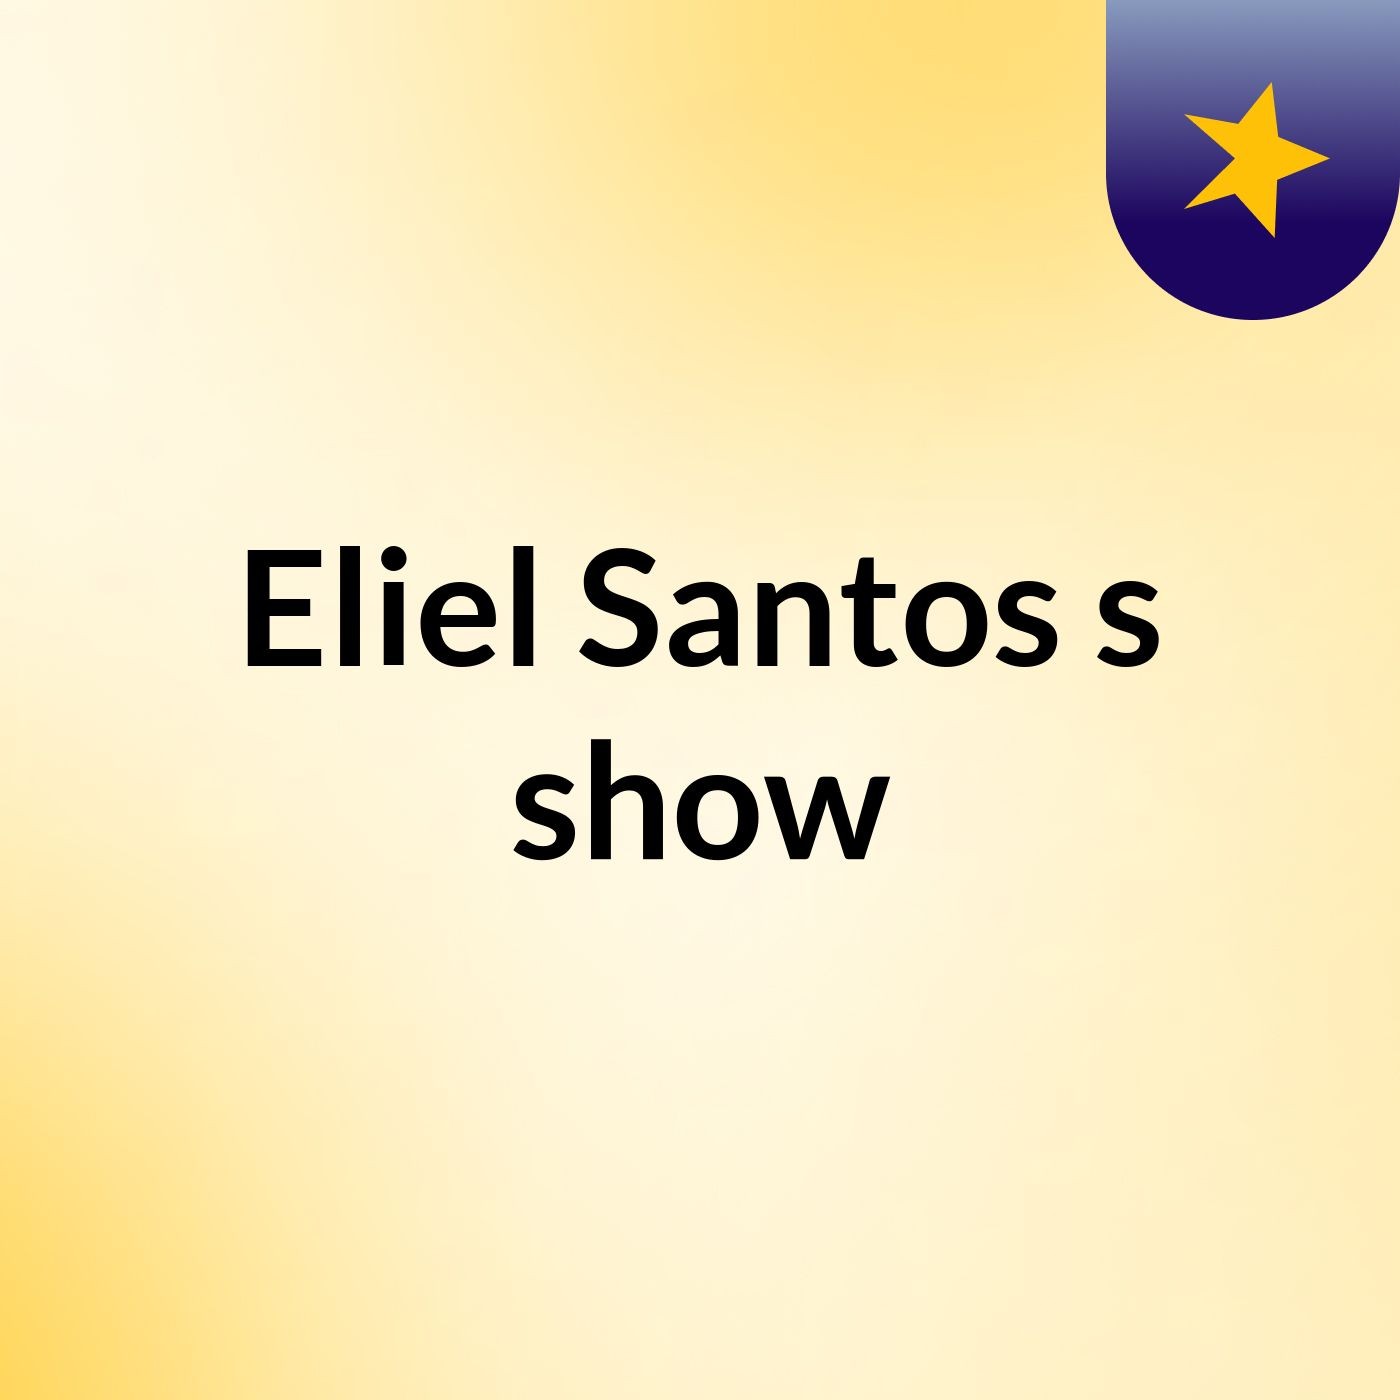 Eliel Santos's show